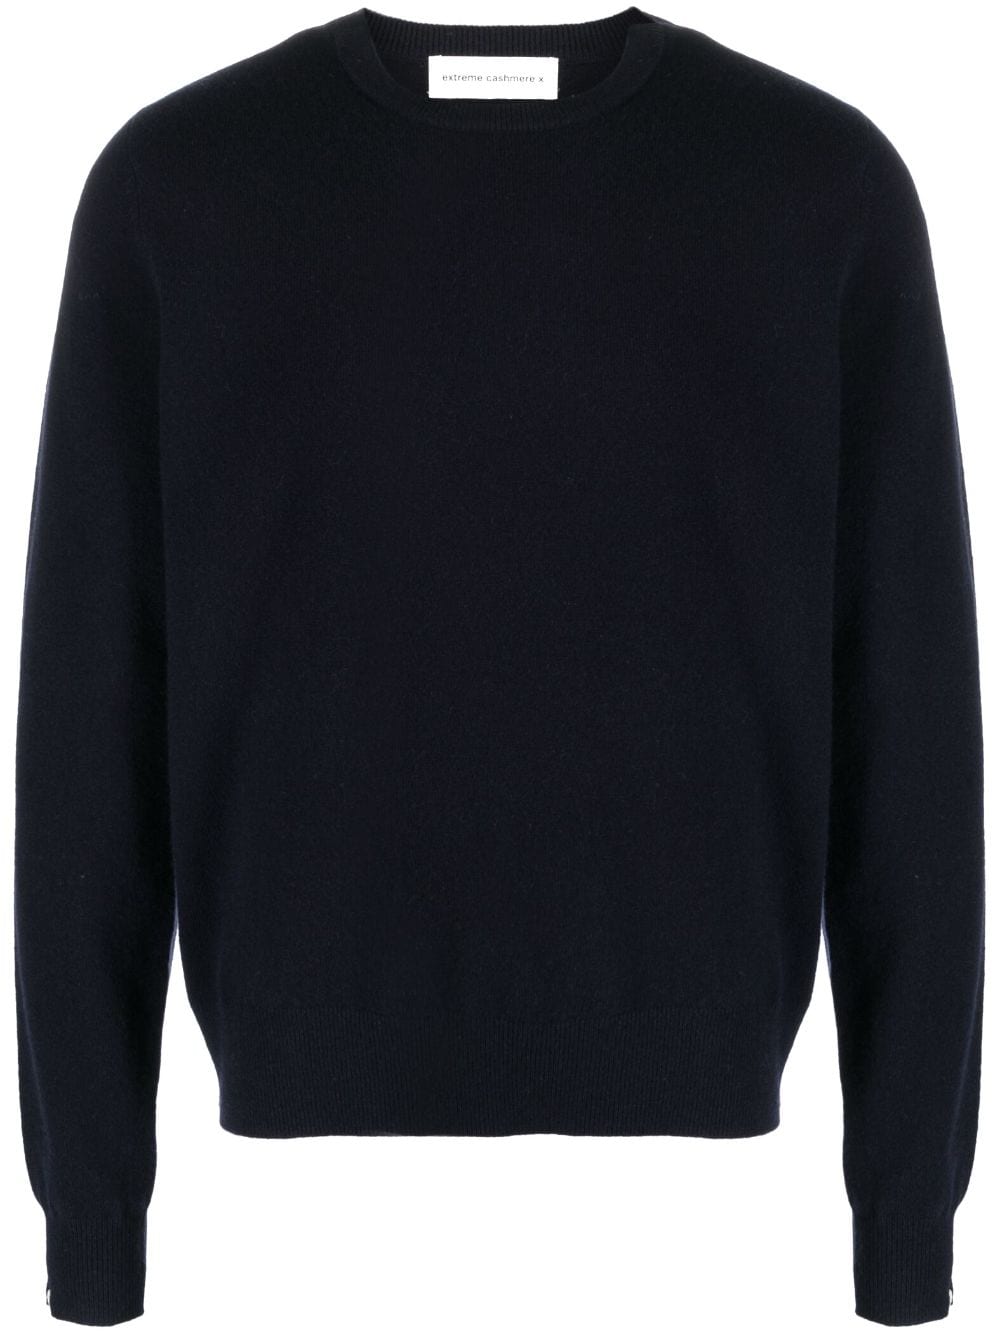 n36 long-sleeved knitted jumper